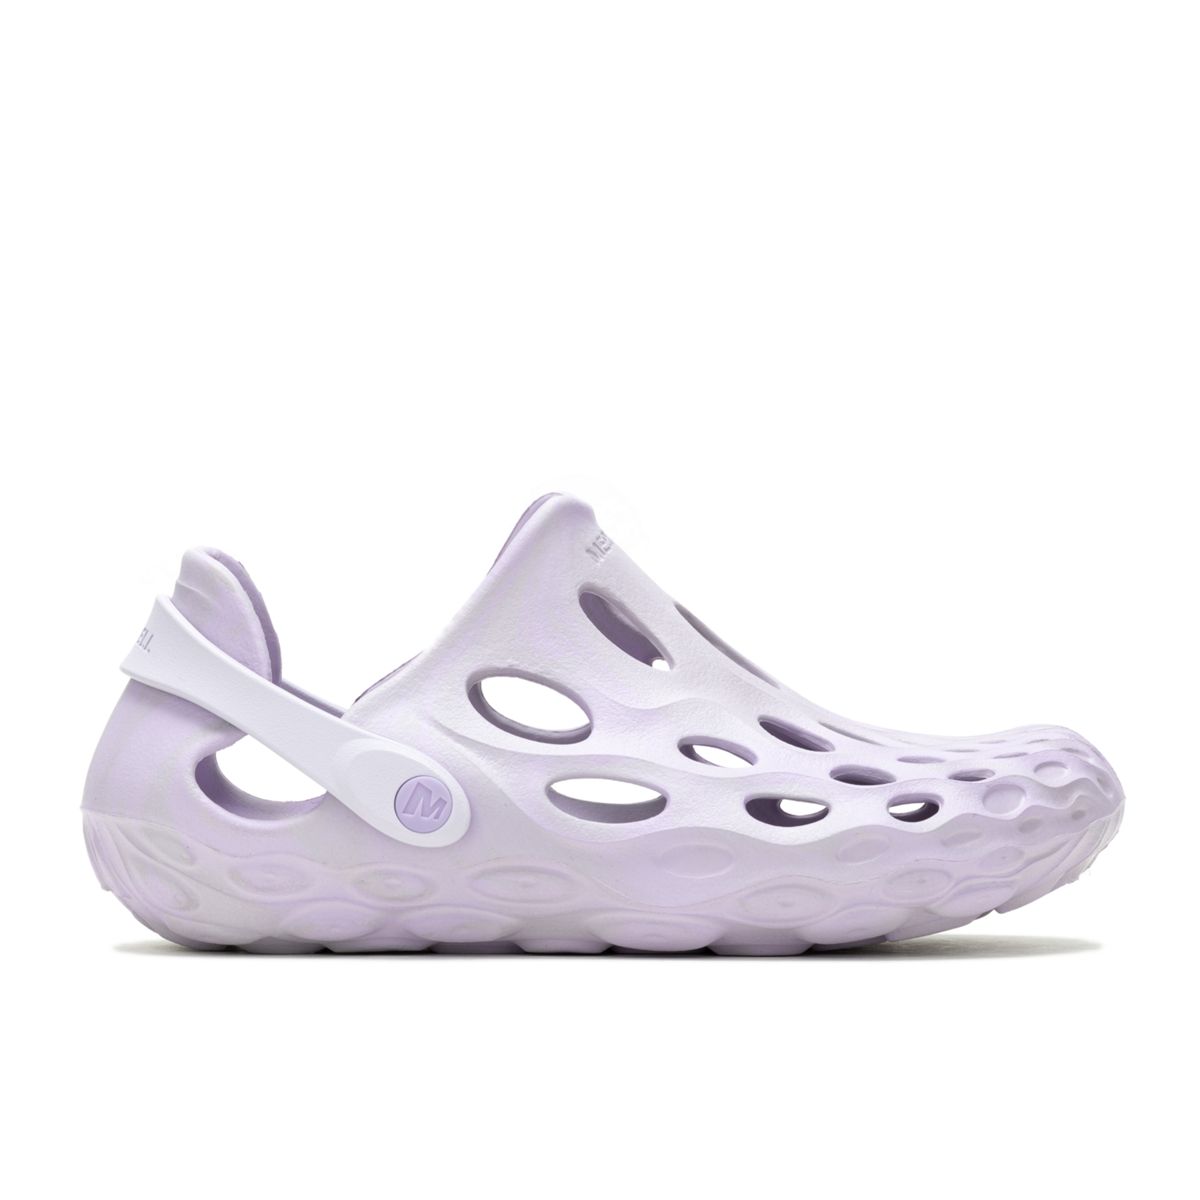 Merrell Amaranth Slip-On Sneaker Shoes Strappy Flats Women's Size